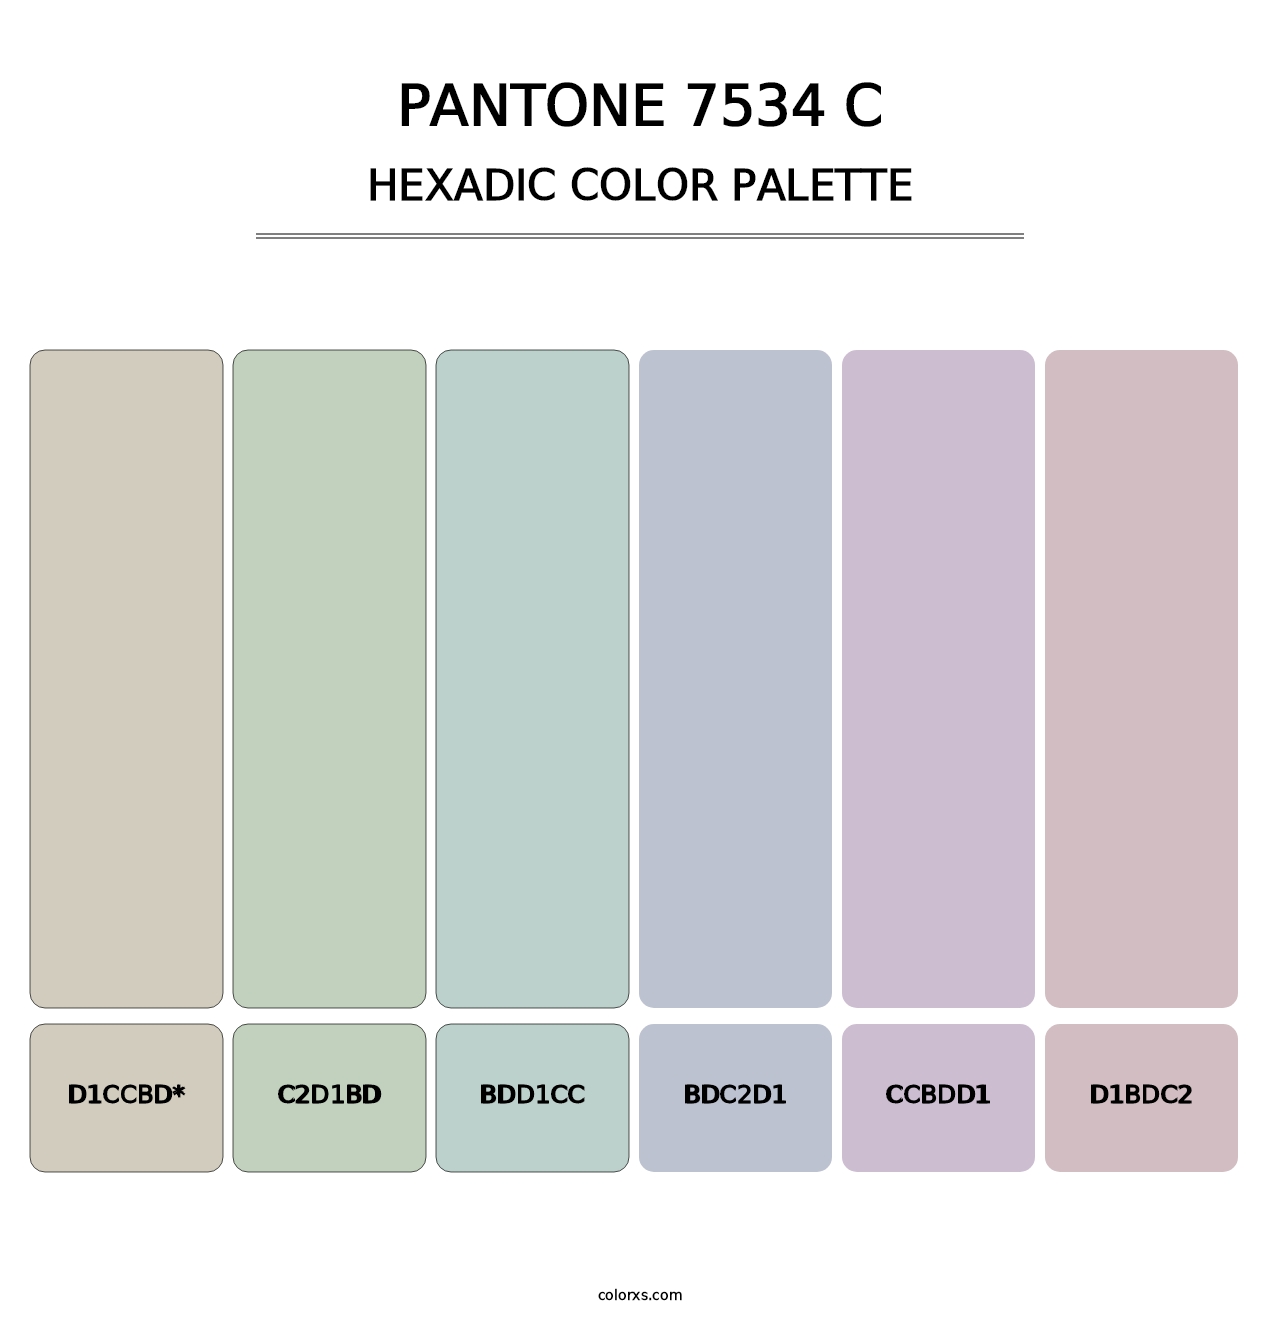 PANTONE 7534 C - Hexadic Color Palette